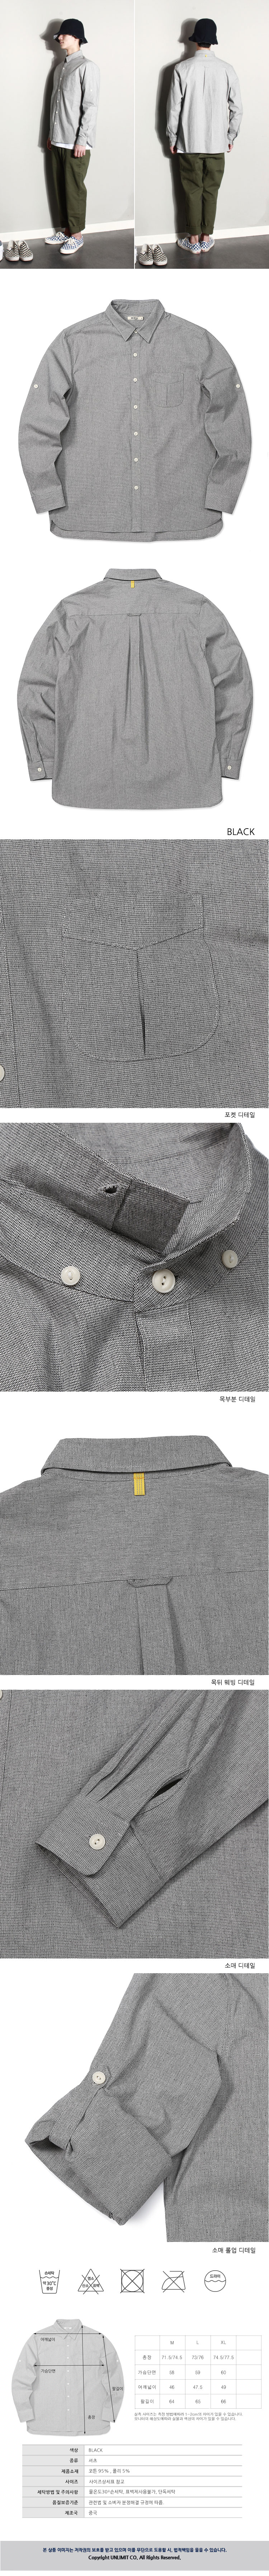 WB Check Shirts (U17CTSH53) 남녀공용 체크셔츠 59,000원 - 언리미트 패션의류, 스트릿패션, 긴팔셔츠, 체크셔츠 바보사랑 WB Check Shirts (U17CTSH53) 남녀공용 체크셔츠 59,000원 - 언리미트 패션의류, 스트릿패션, 긴팔셔츠, 체크셔츠 바보사랑